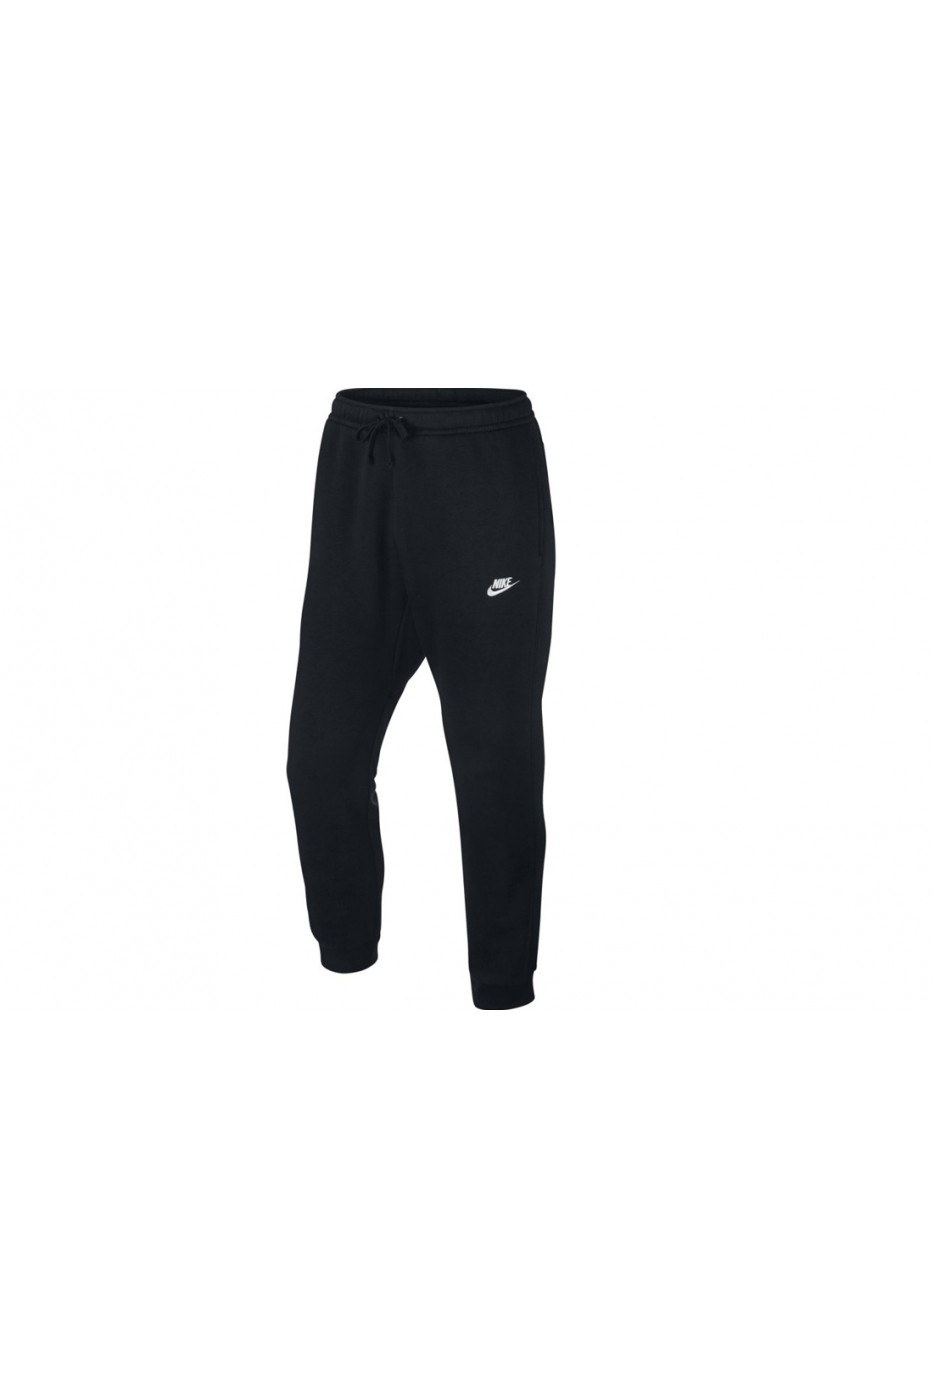 rebanada equivocado Revelar Pantaloni sport pentru barbati Nike Sportswear Jogger Club Pant 804408-010  - FashionUP!